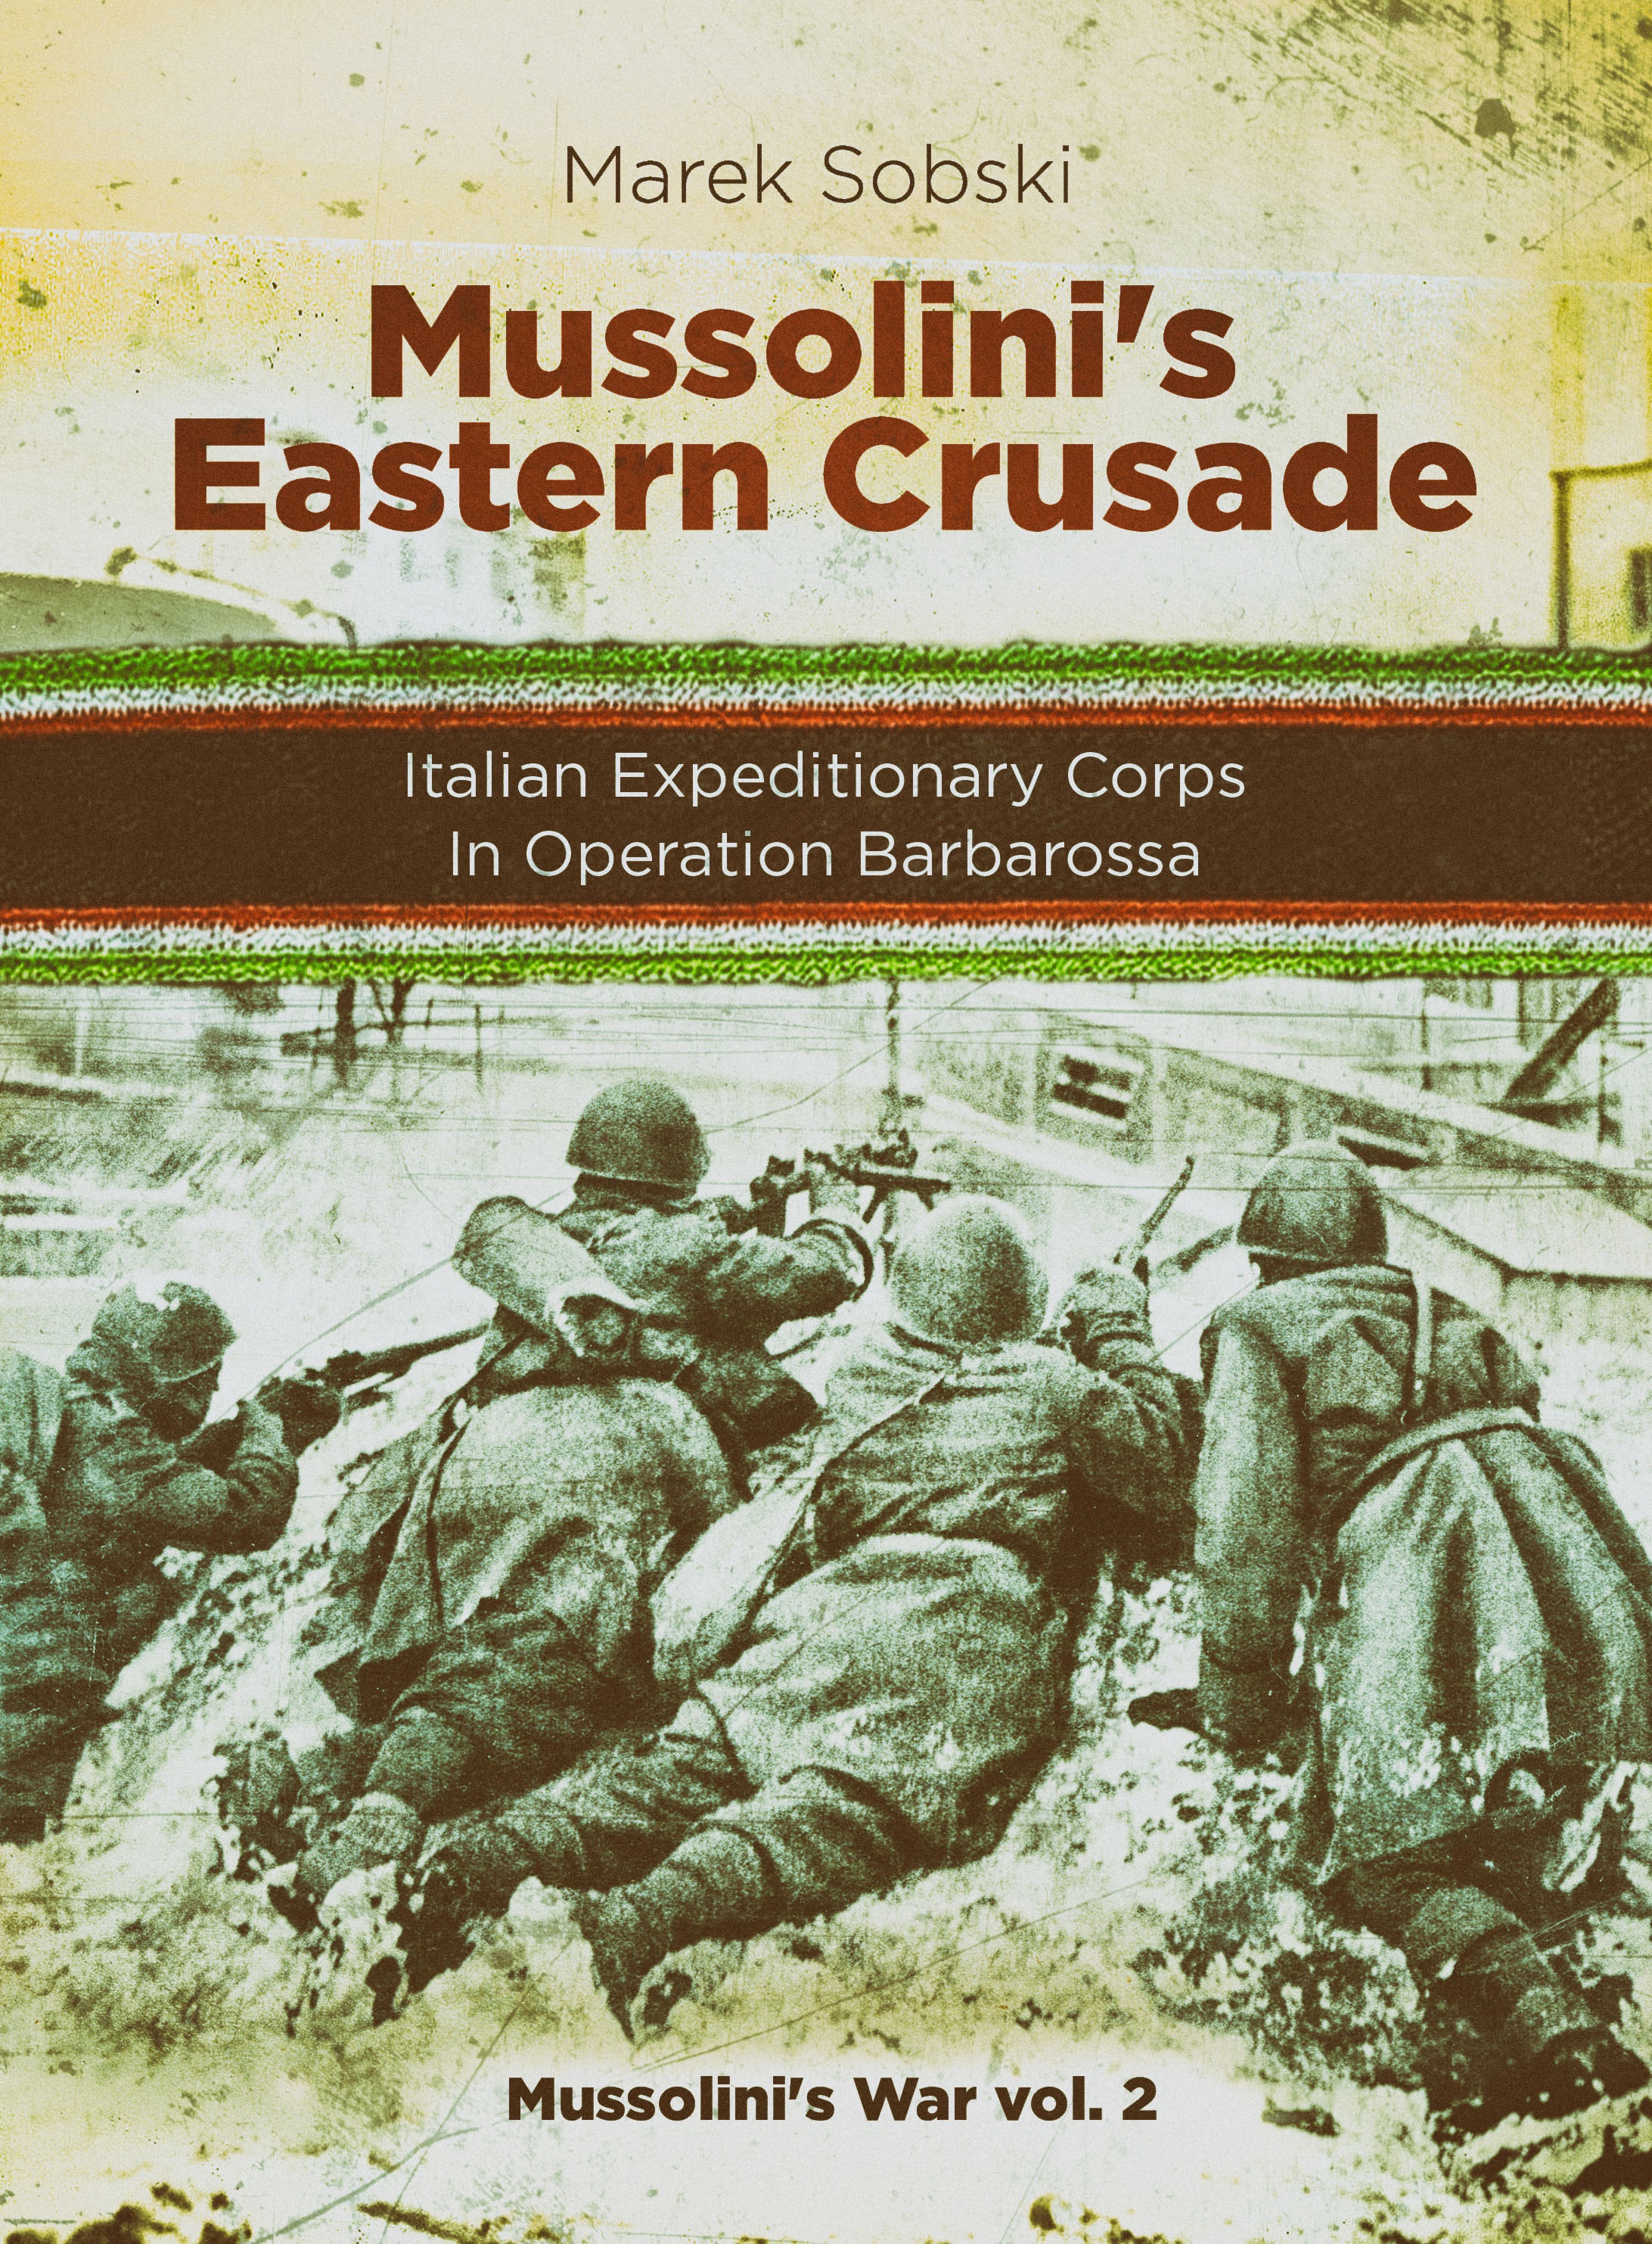 Mussolini's Eastern Crusade